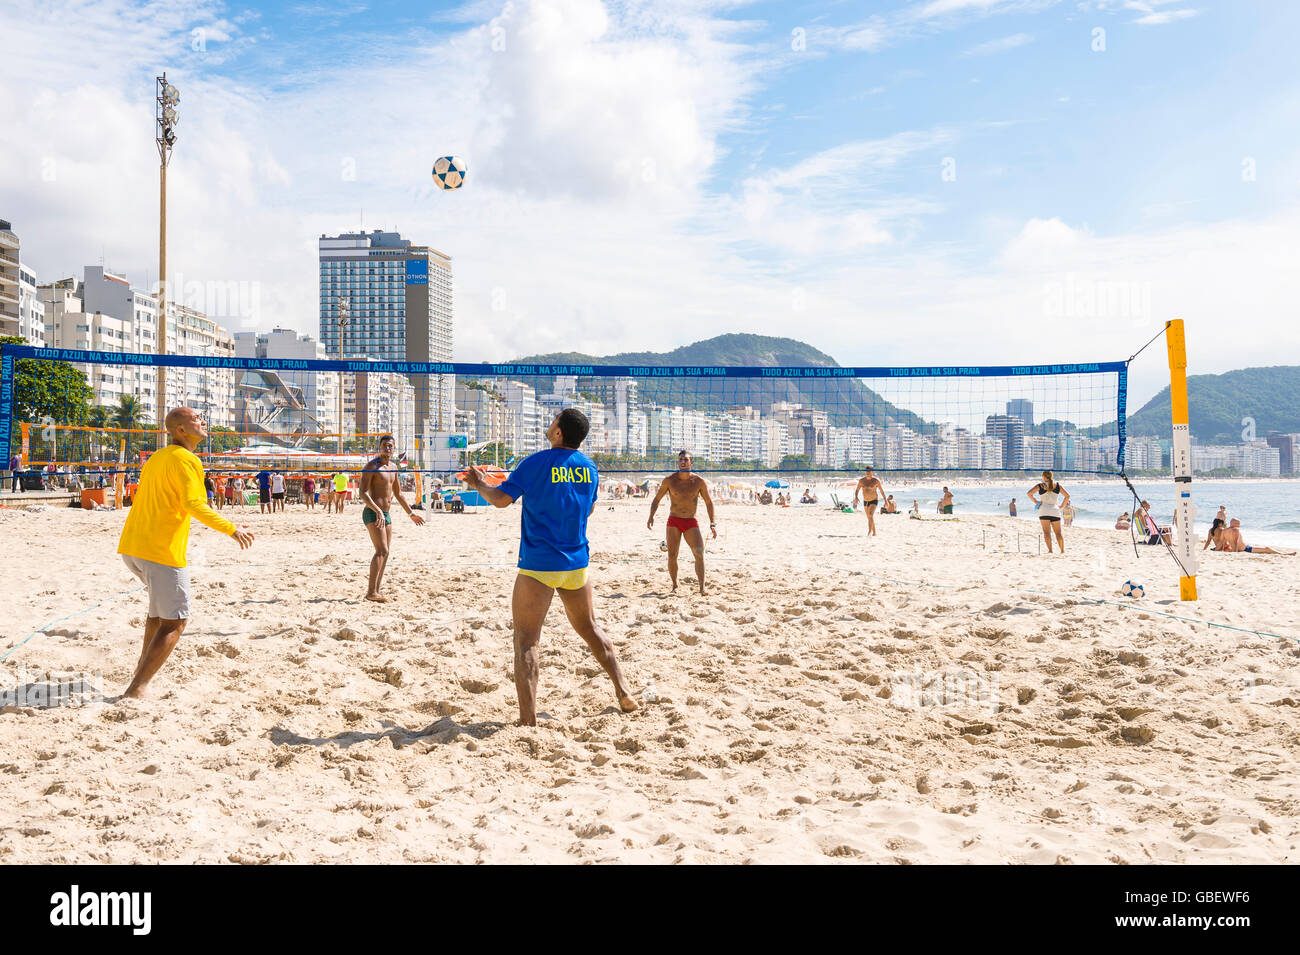 RIO DE JANEIRO - MARCH 15, 2016: Brazilian men play a game of futevôlei (footvolley, a sport combining football and volleyball. Stock Photo